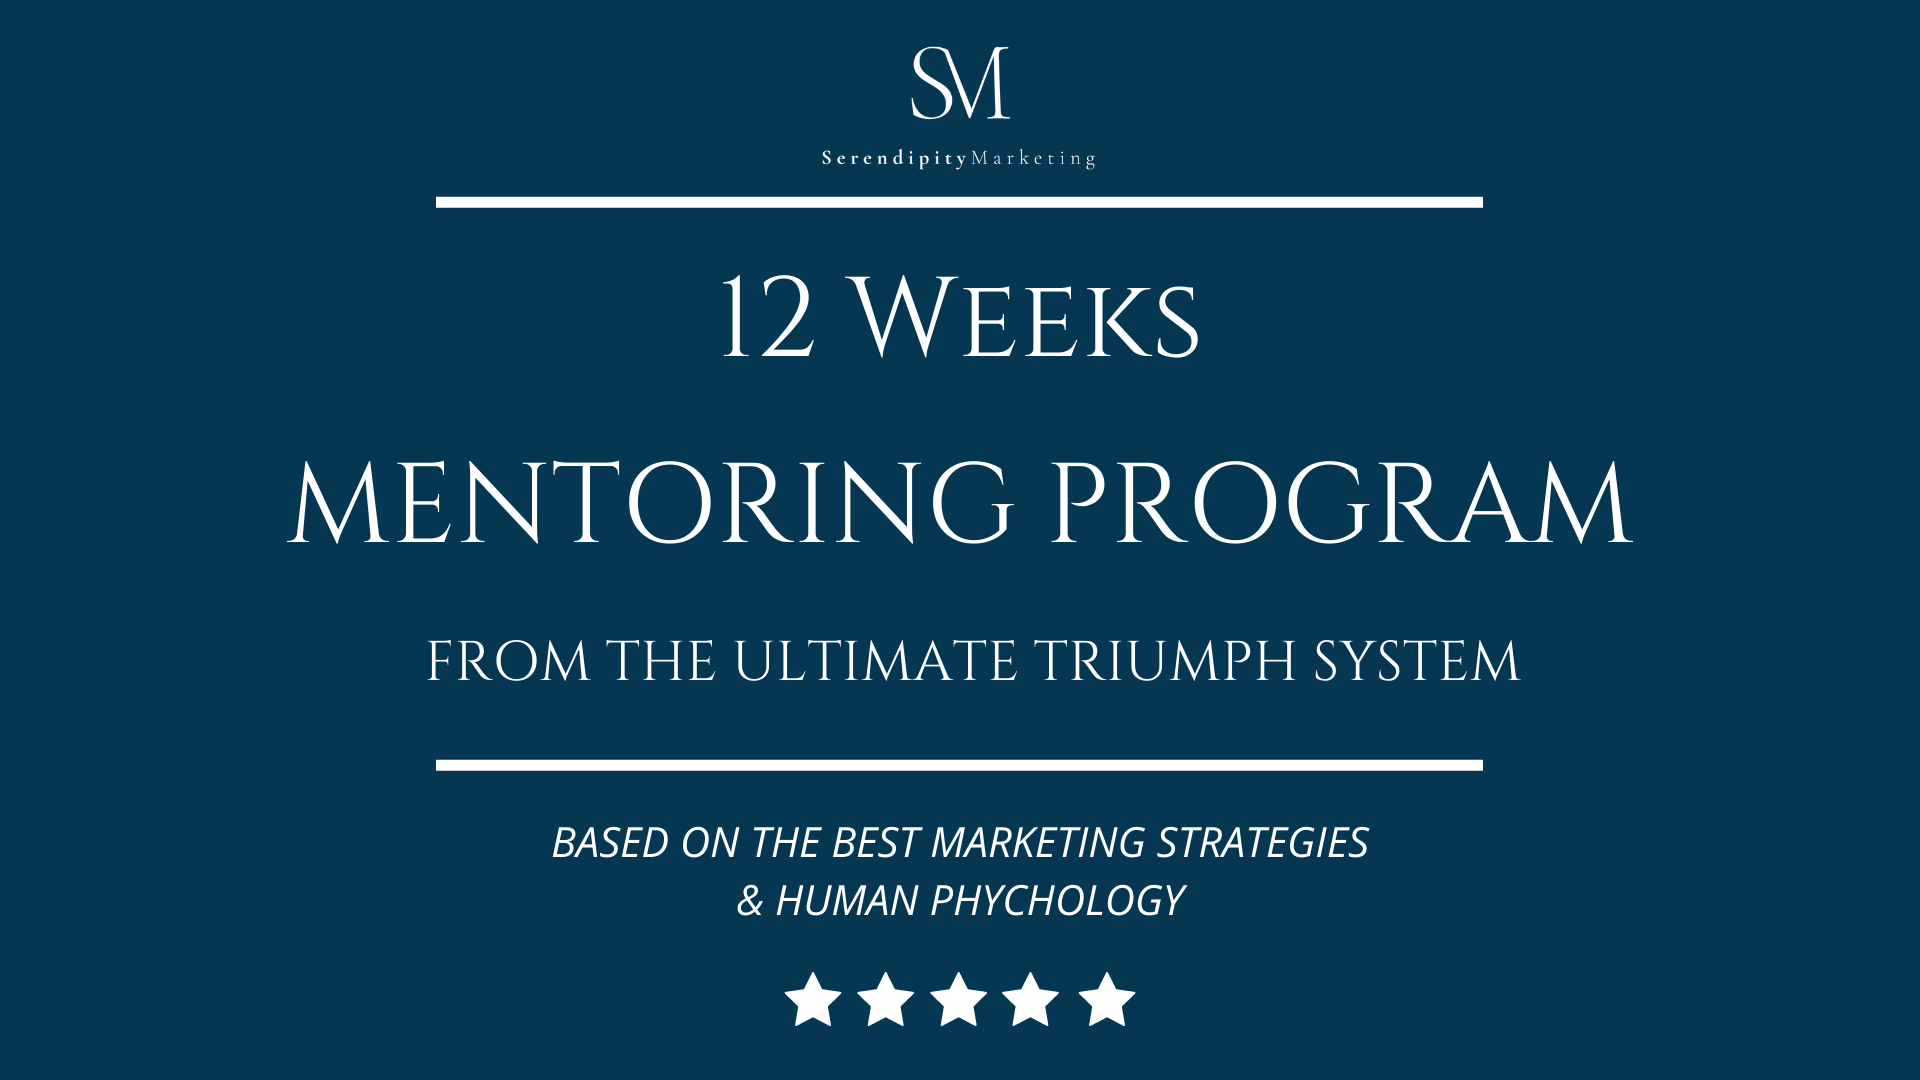 The-Ultimate-Triumph-System-Mentoring-Program